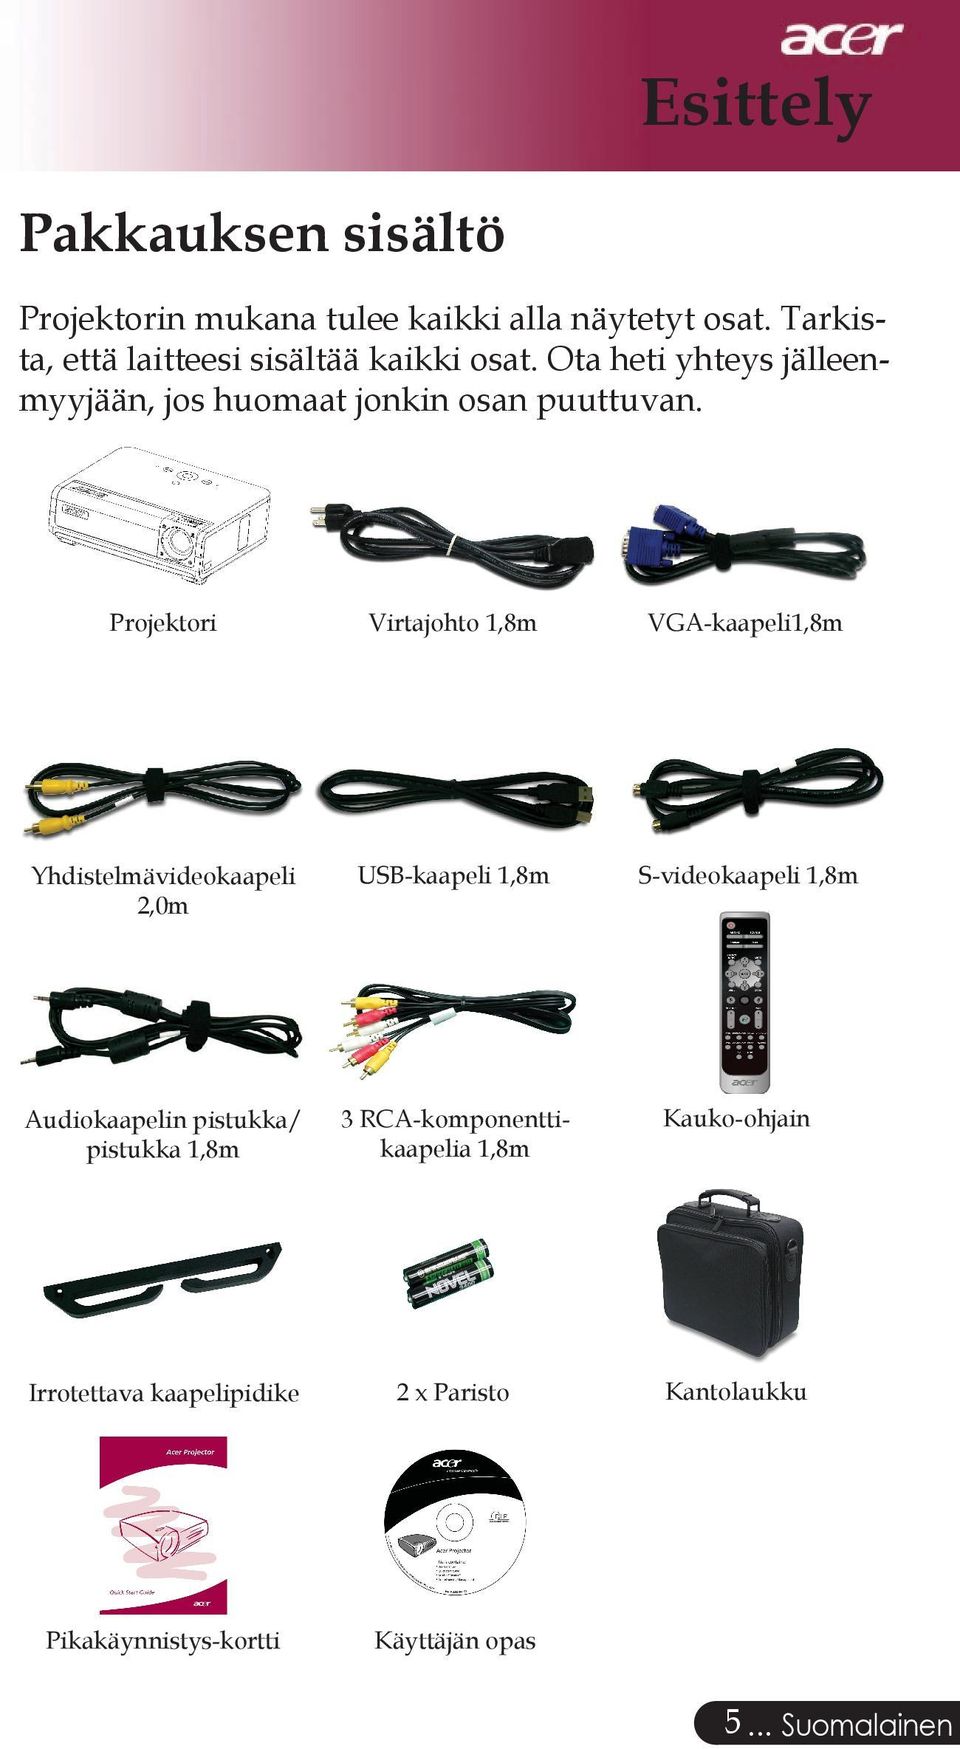 Projektori Virtajohto 1,8m VGA-kaapeli1,8m Yhdistelmävideokaapeli 2,0m USB-kaapeli 1,8m S-videokaapeli 1,8m Audiokaapelin